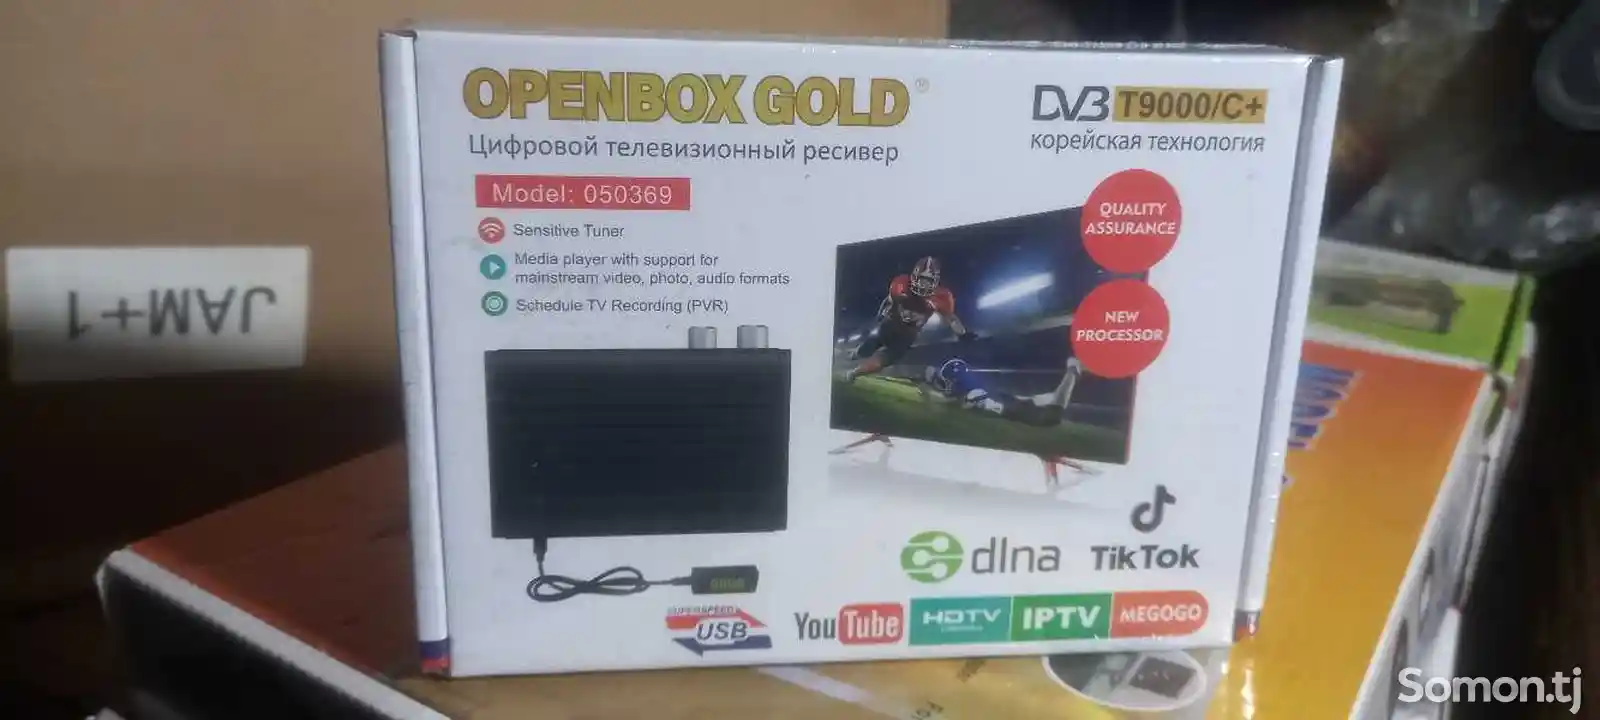 База Openbox Gold-4